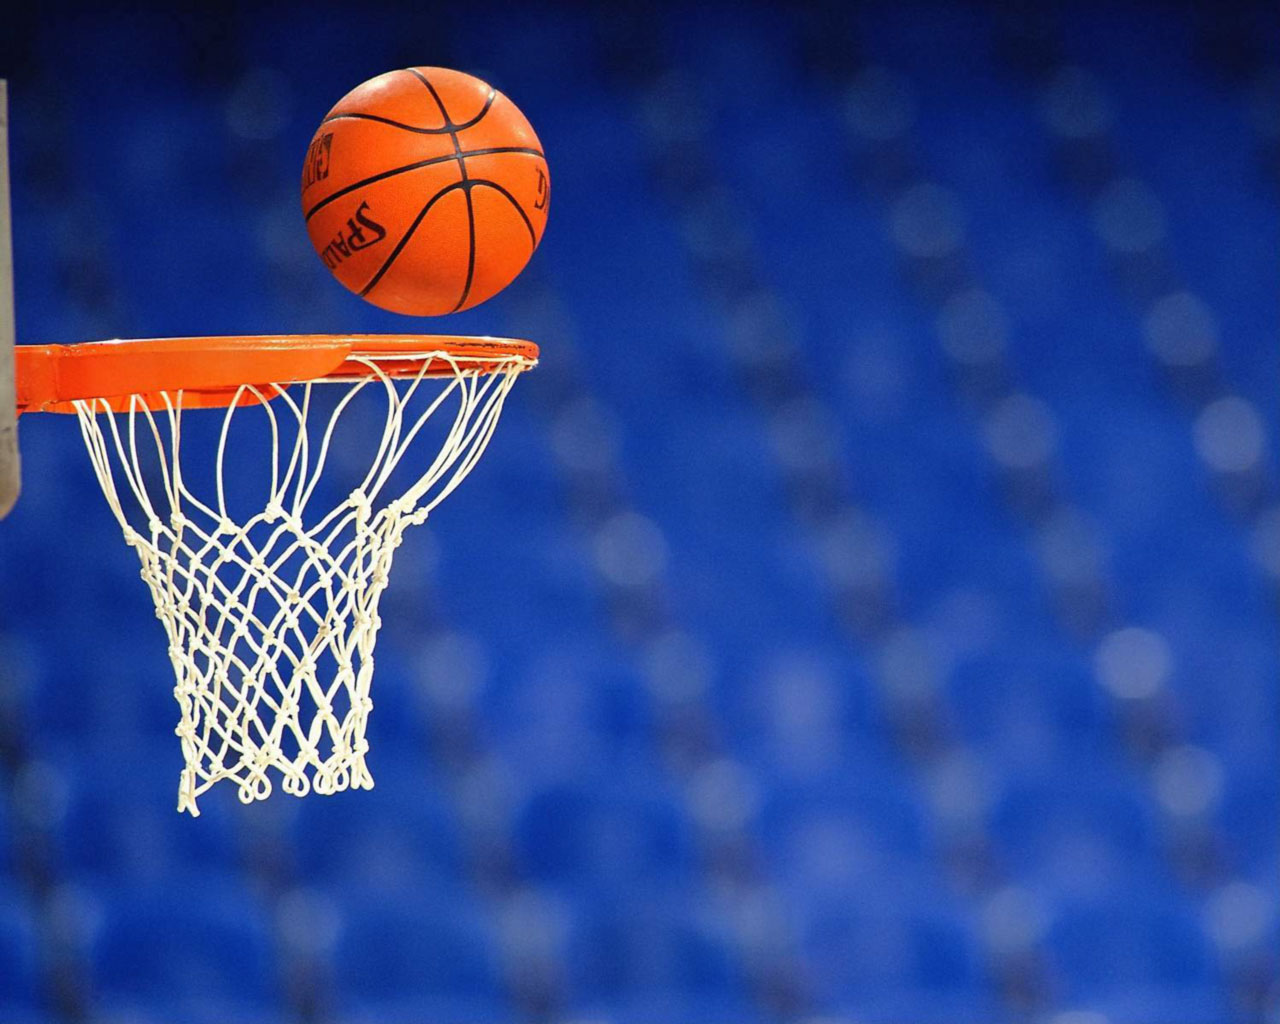 canasta de papel tapiz,aro de baloncesto,baloncesto,red,baloncesto,equipo deportivo